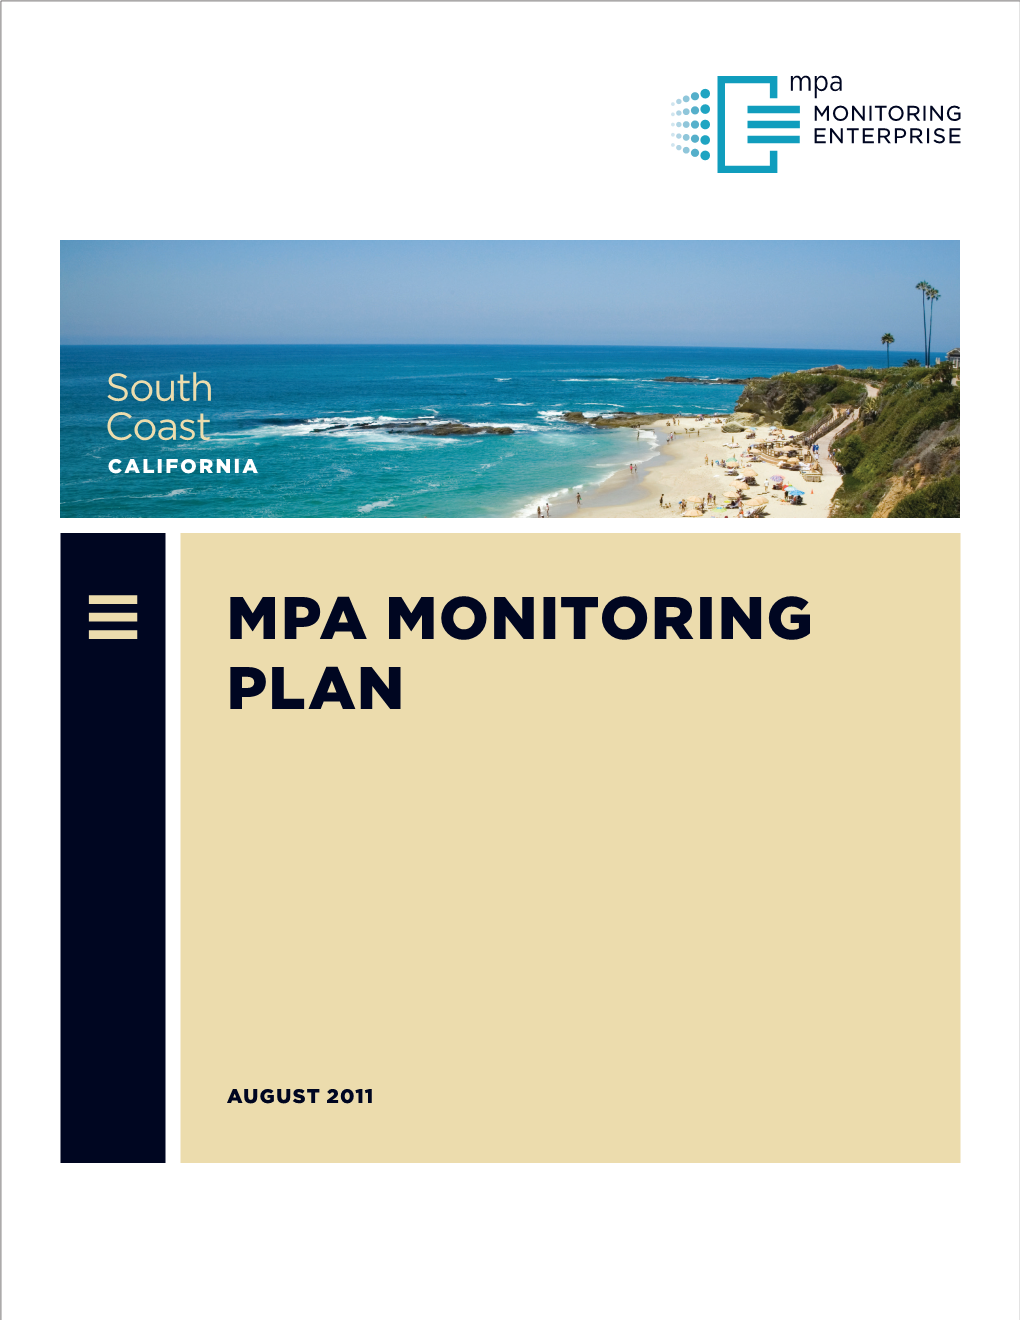 South Coast MPA Monitoring Plan